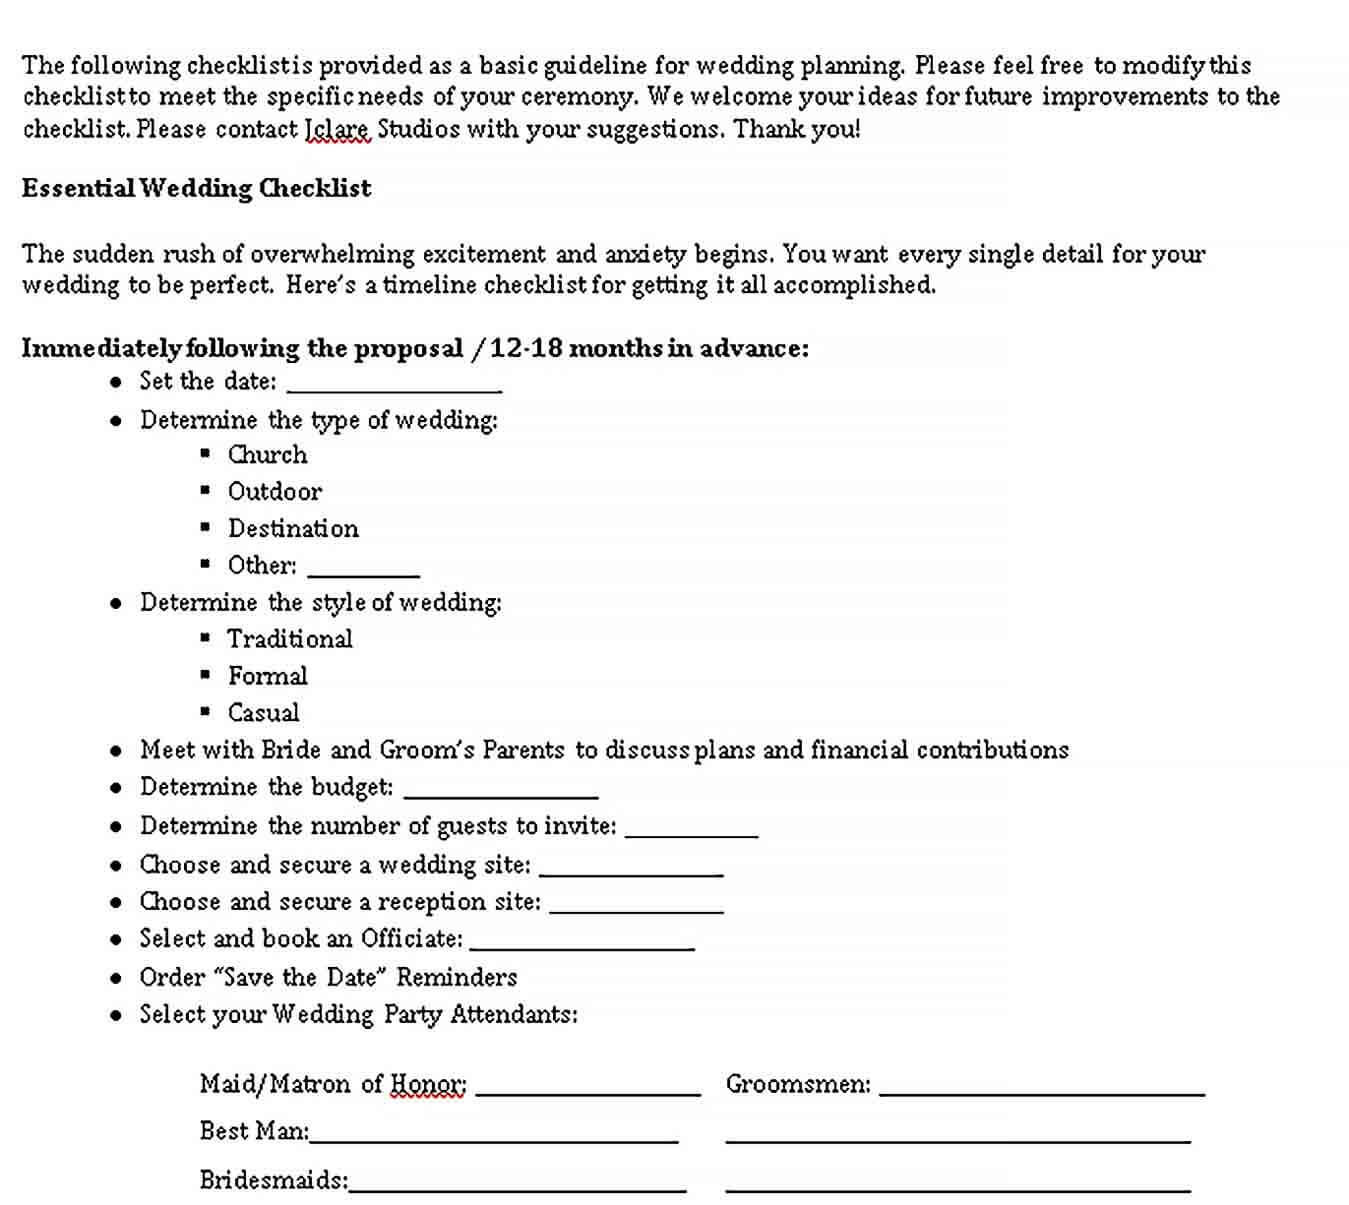 Sample Essential Wedding Checklist